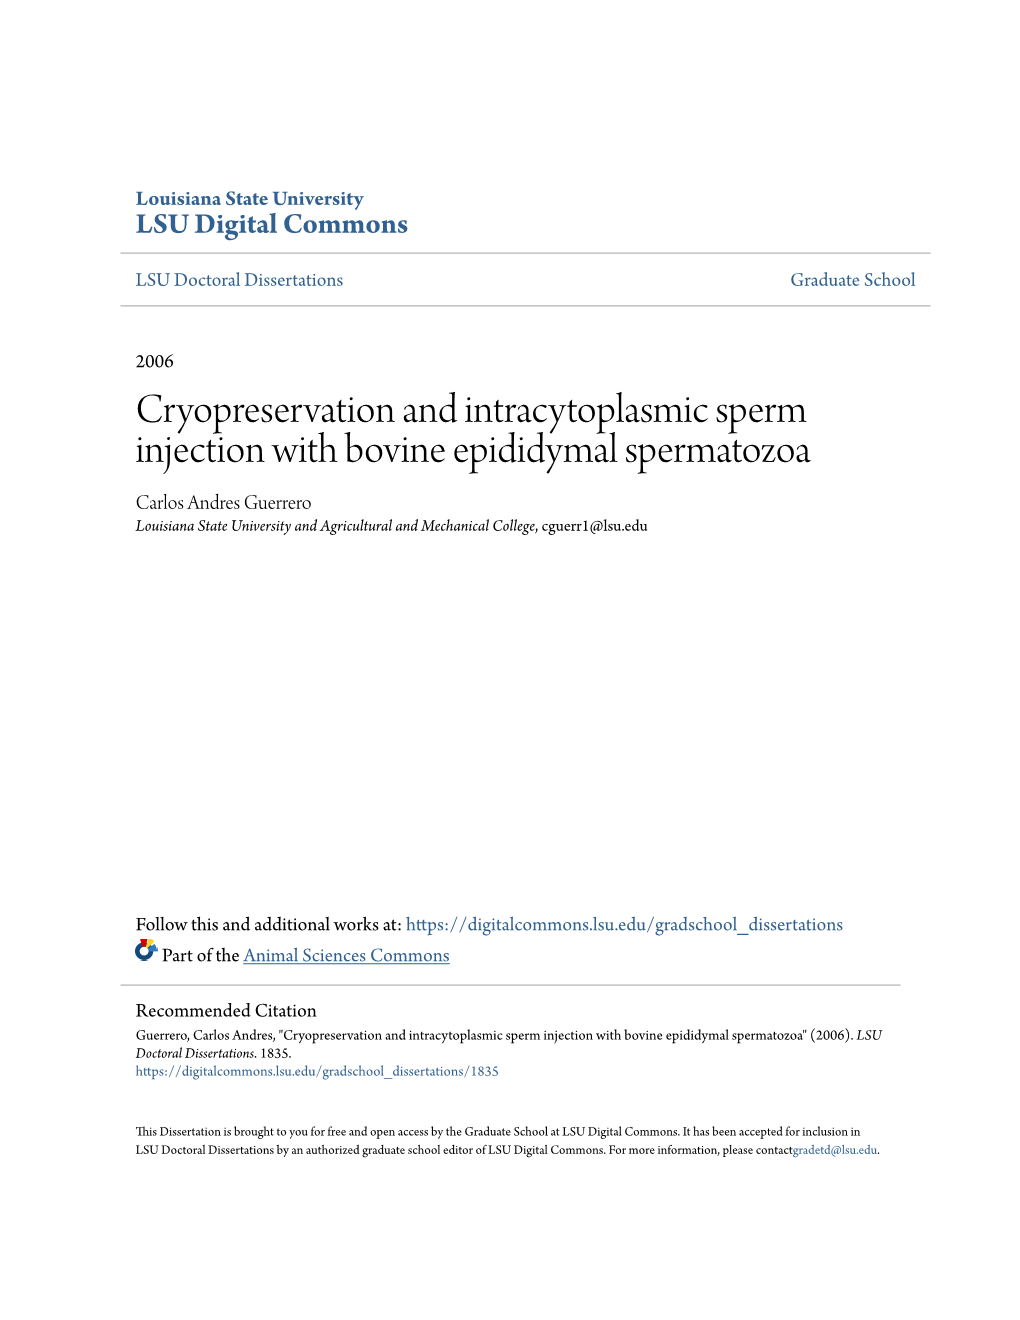 Cryopreservation and Intracytoplasmic Sperm